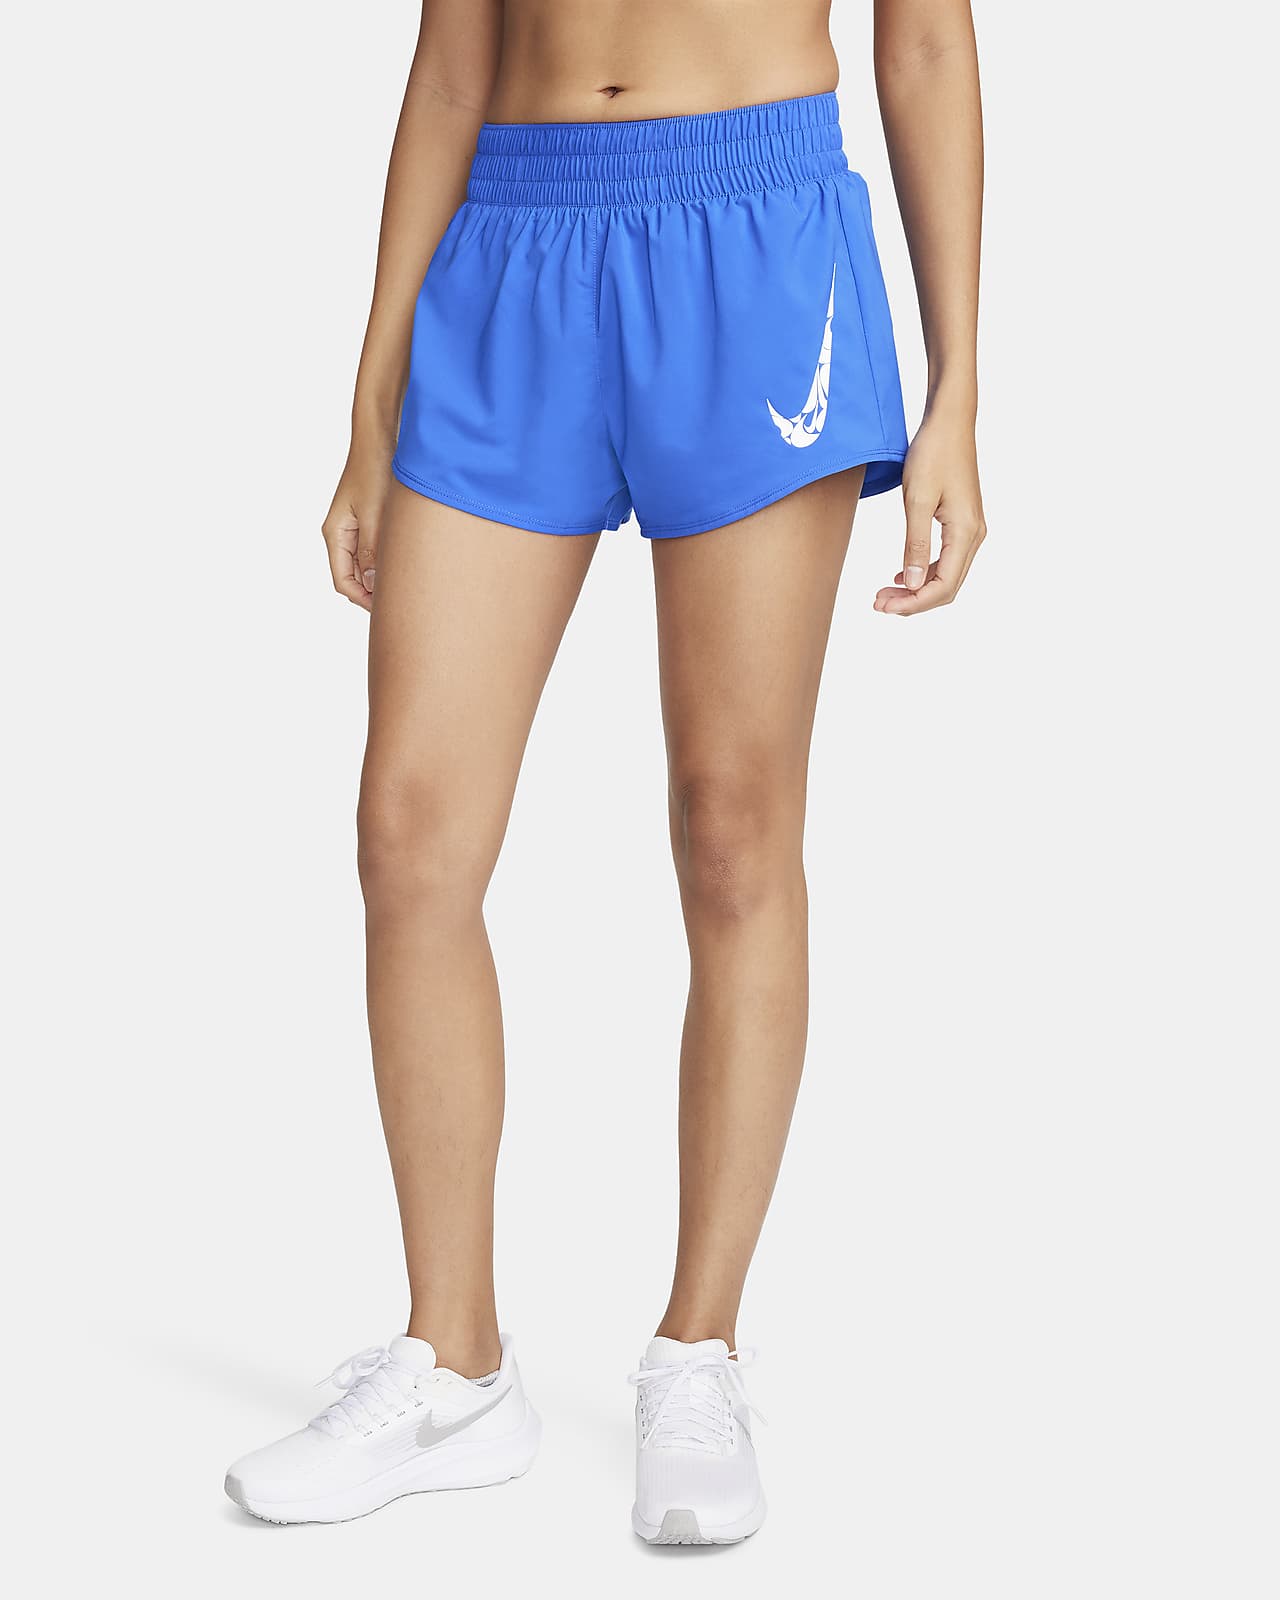 Nike, Dri-FIT Run Division Women's 2-in-1 Shorts, Cerulean Blue